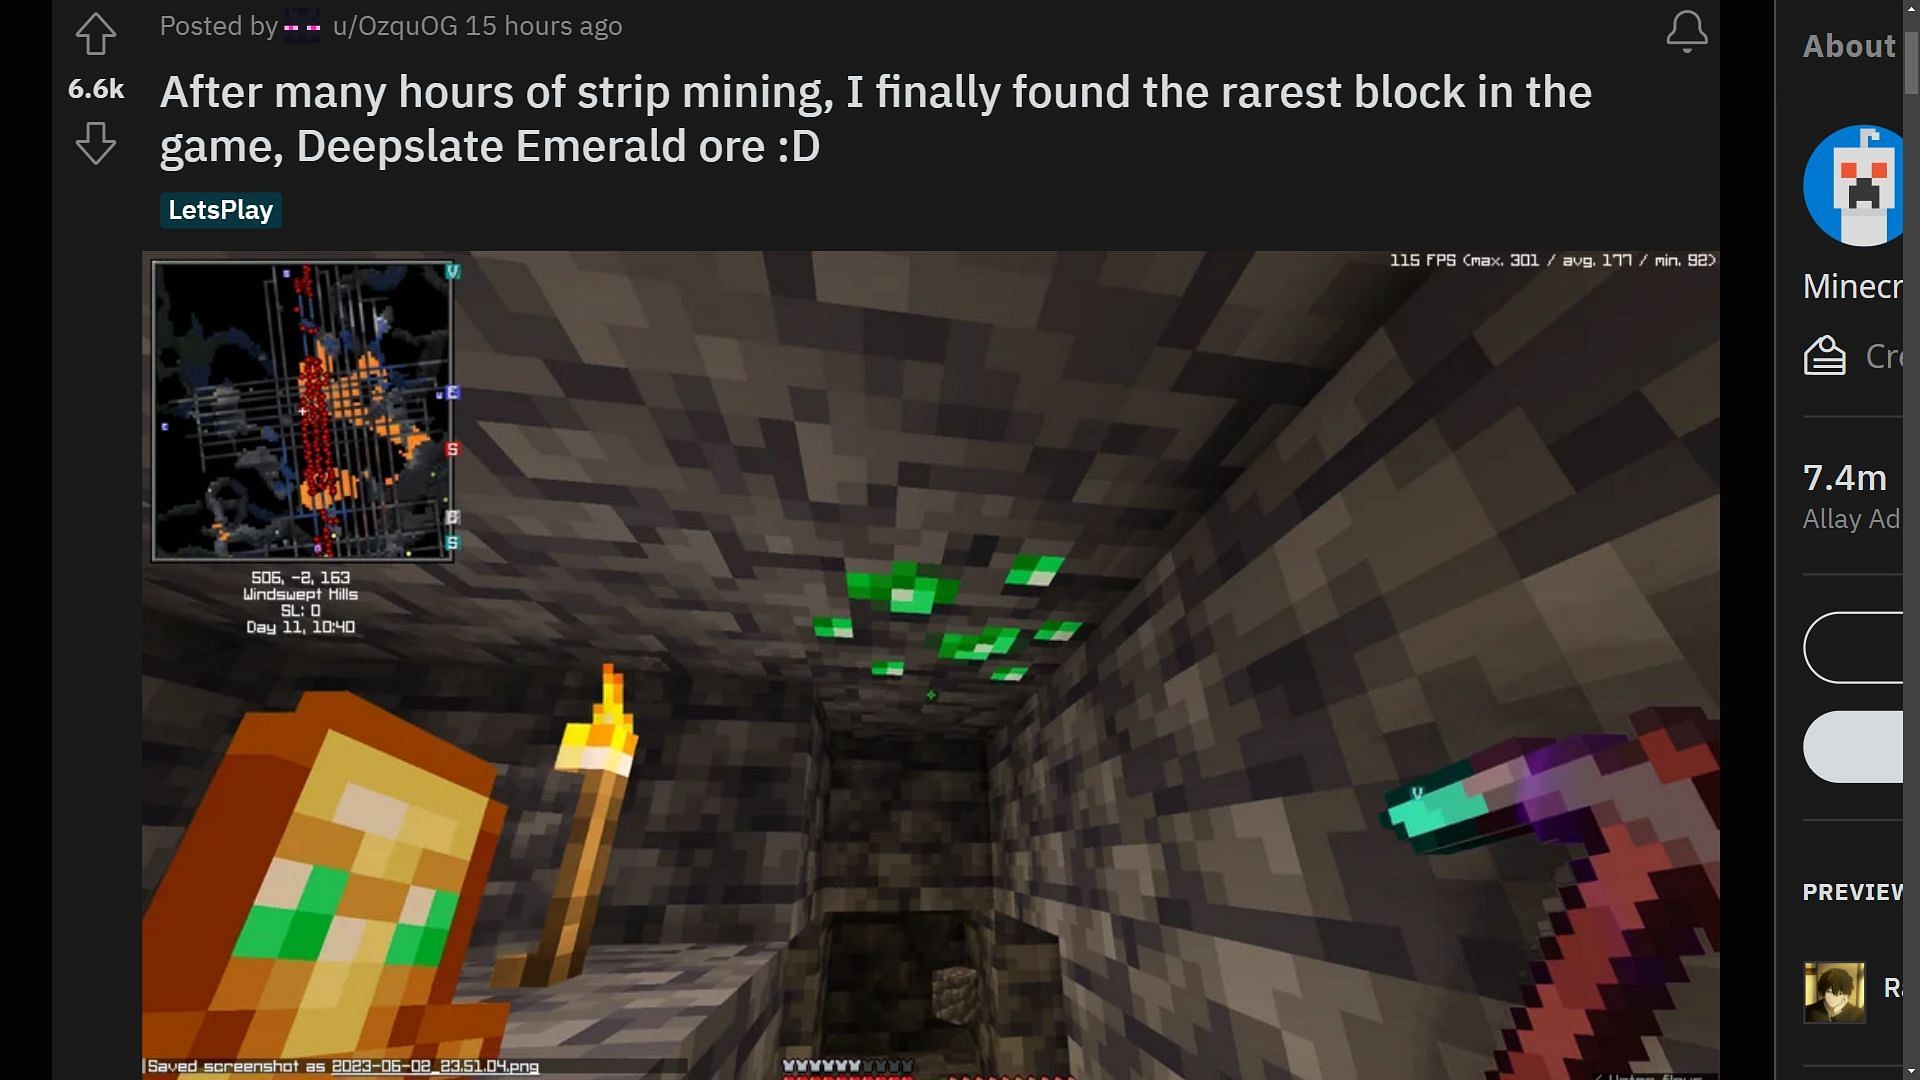 Minecraft Redditor by the name of u/QzquOG found the rarest deepslate emerald ore block in their world (Image via Sportskeeda)